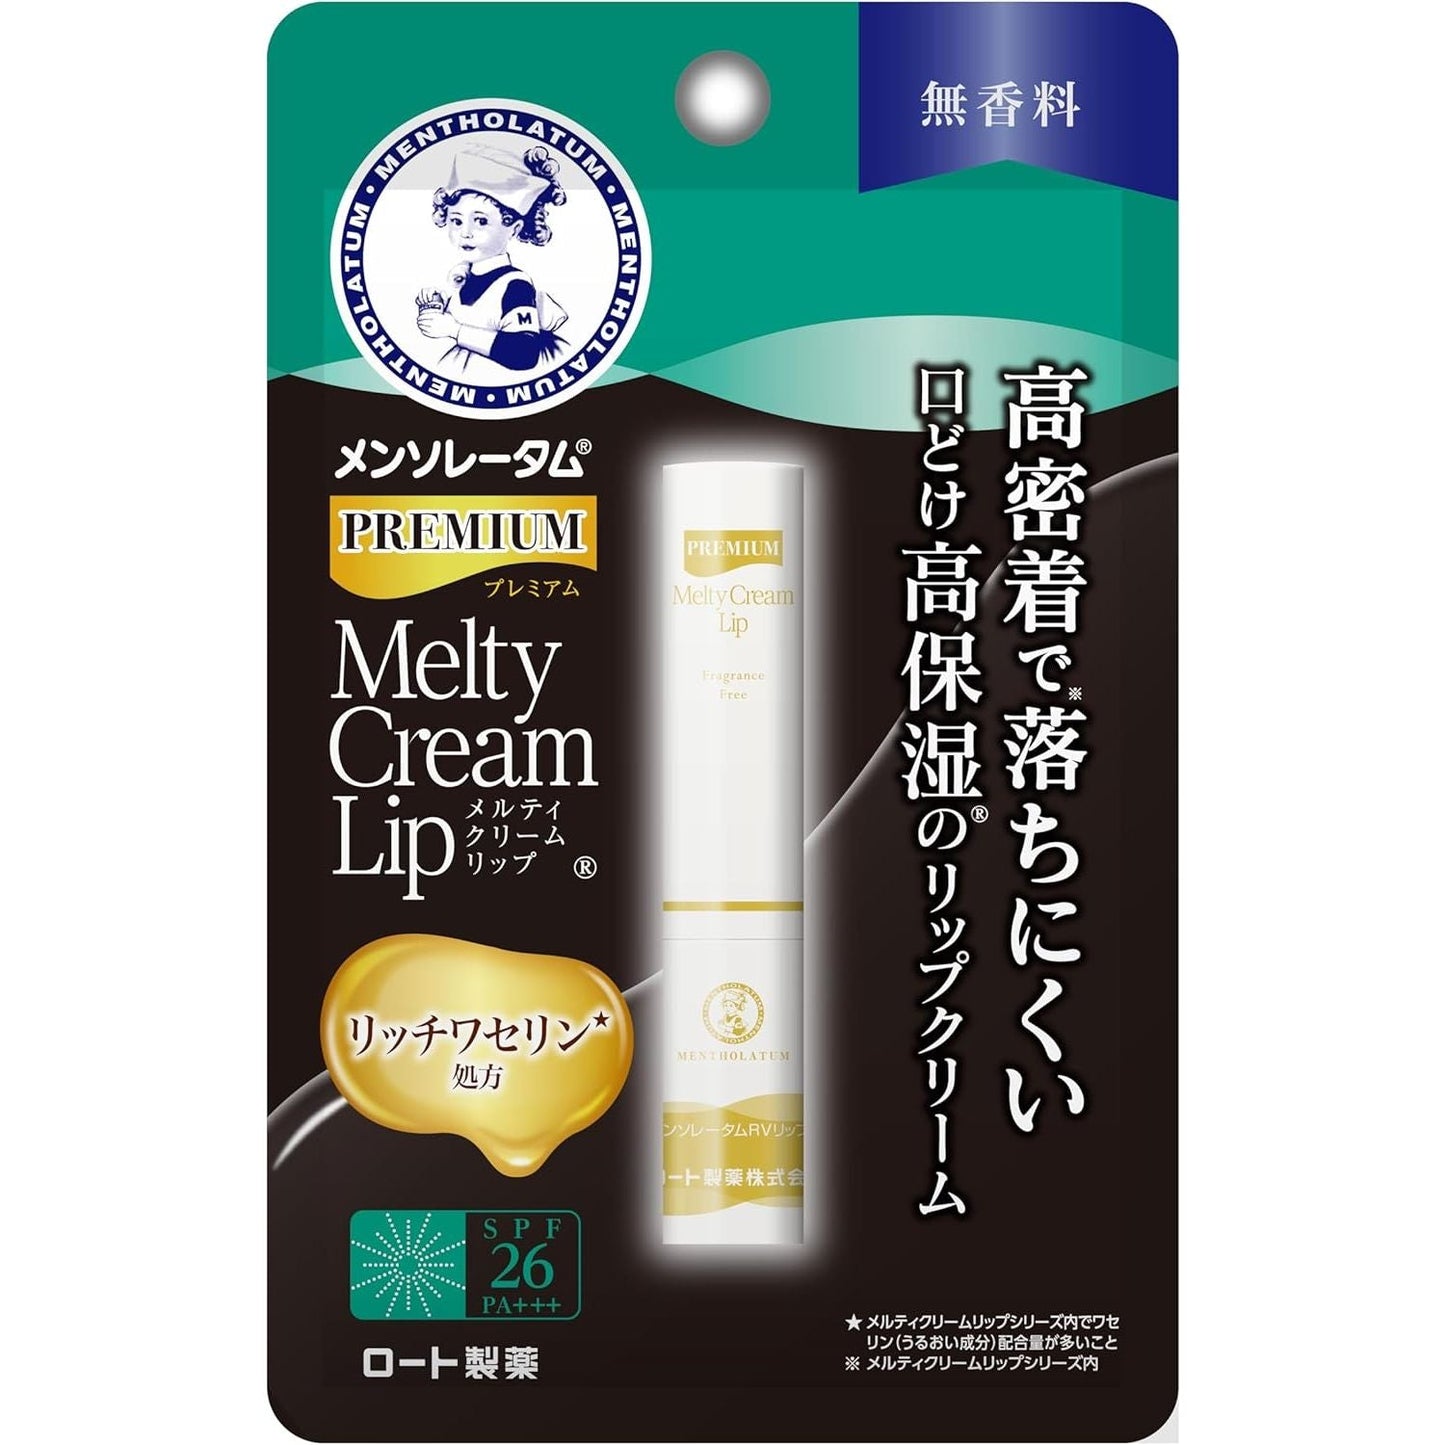 Mentholatum曼秀雷敦 melty cream lip 濃郁保濕潤唇膏 2.4g 多香味